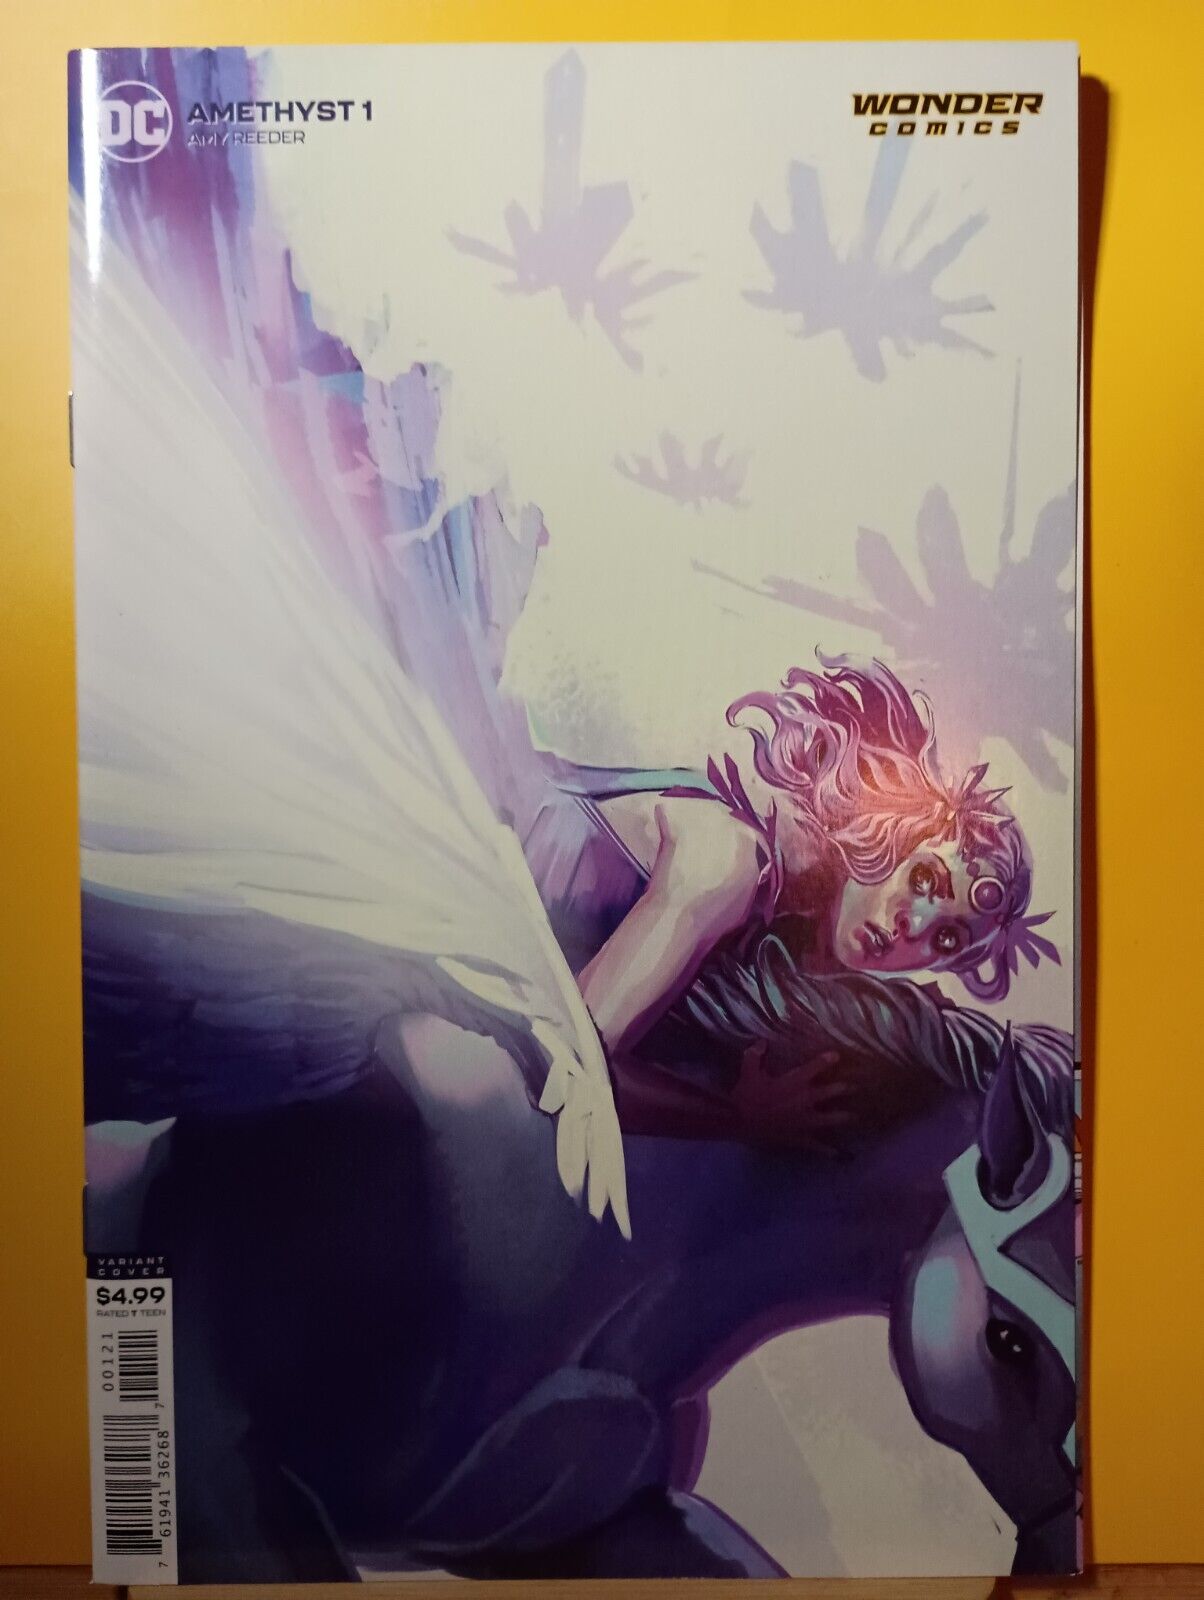 2020 DC Wonder Comics Amethyst Issue 1 Stephanie Hans Cover B Variant FREE SHPNG